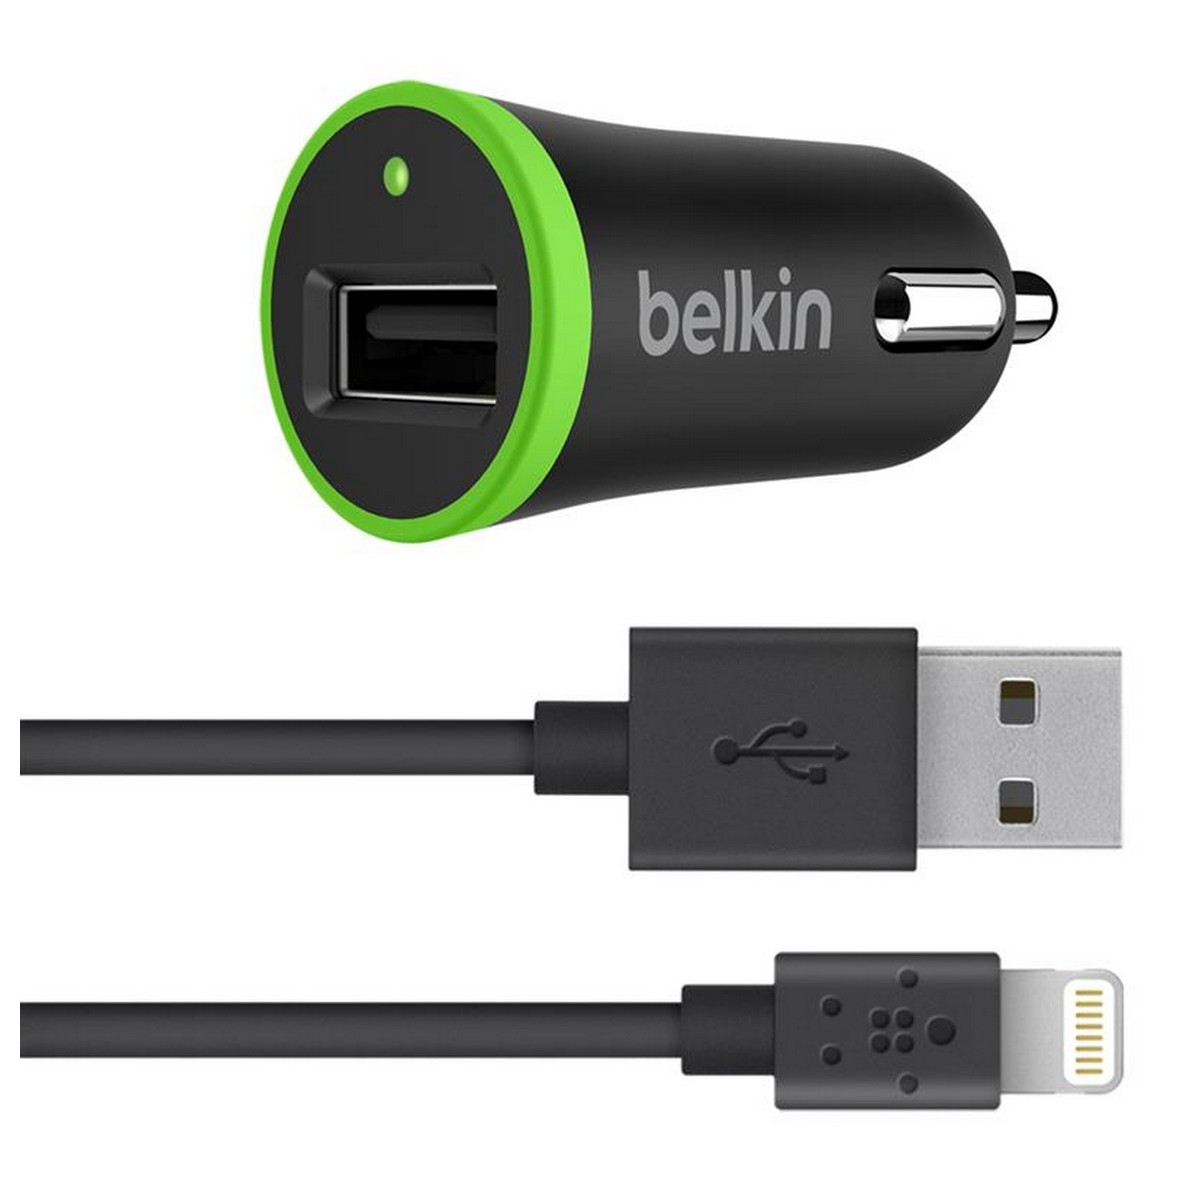 Автомобильное зарядное устройство Belkin USB BoostUp Charger (Lightning сable, USB 2.4A) Black (F8J1